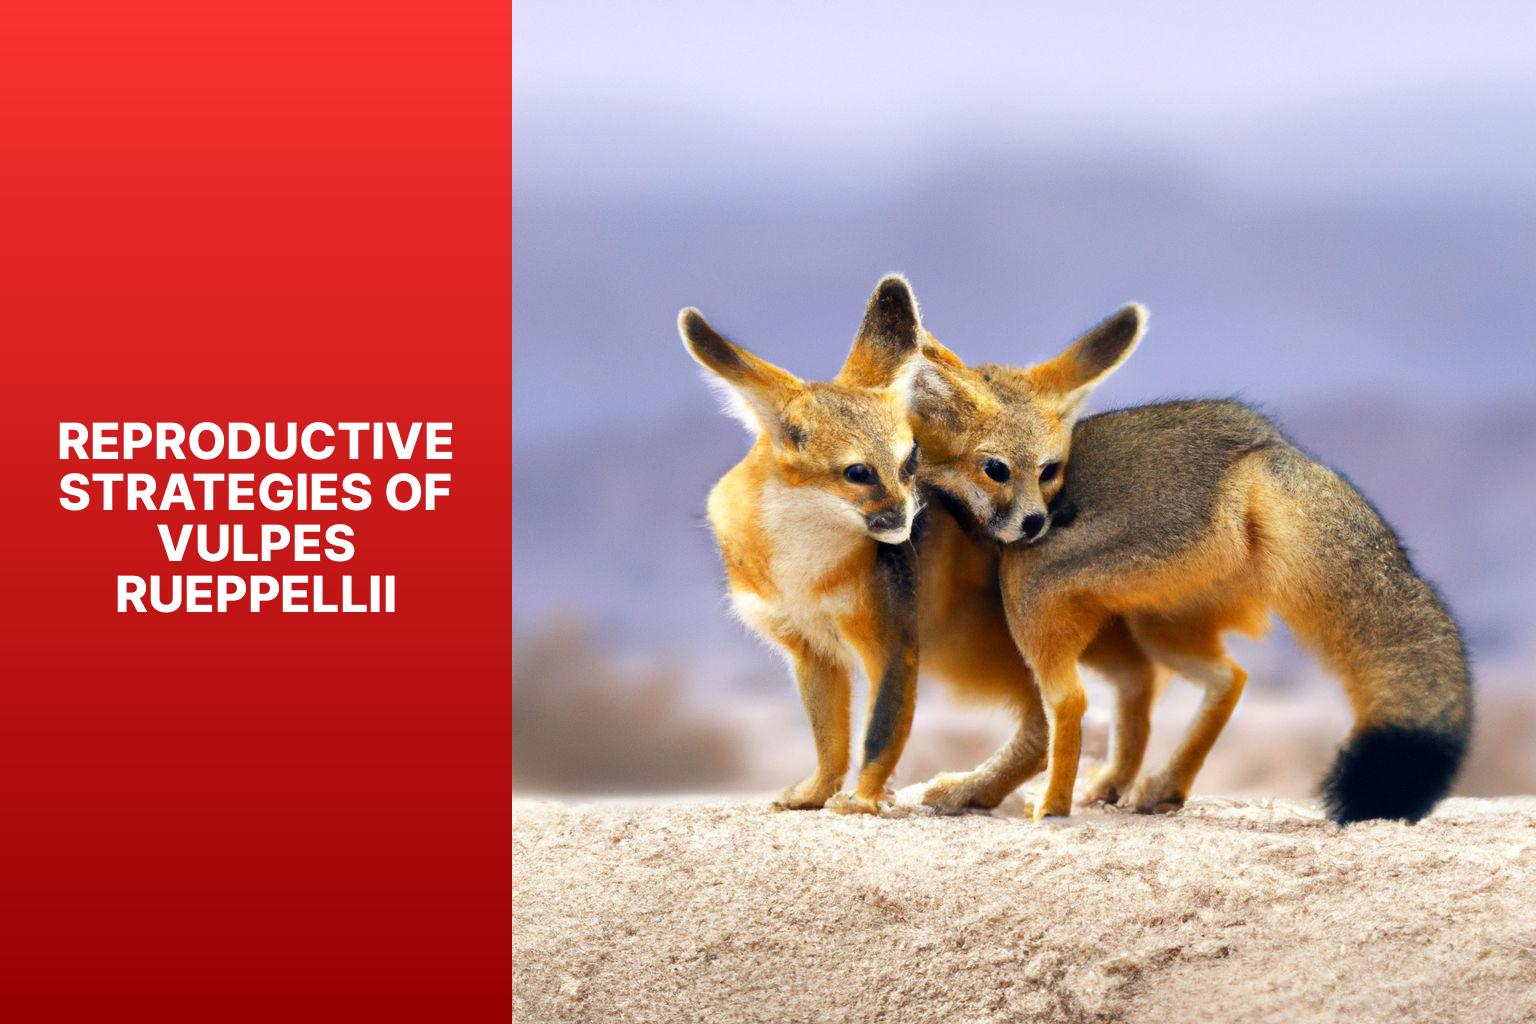 Reproductive Strategies of Vulpes rueppellii - Vulpes rueppellii Reproduction 